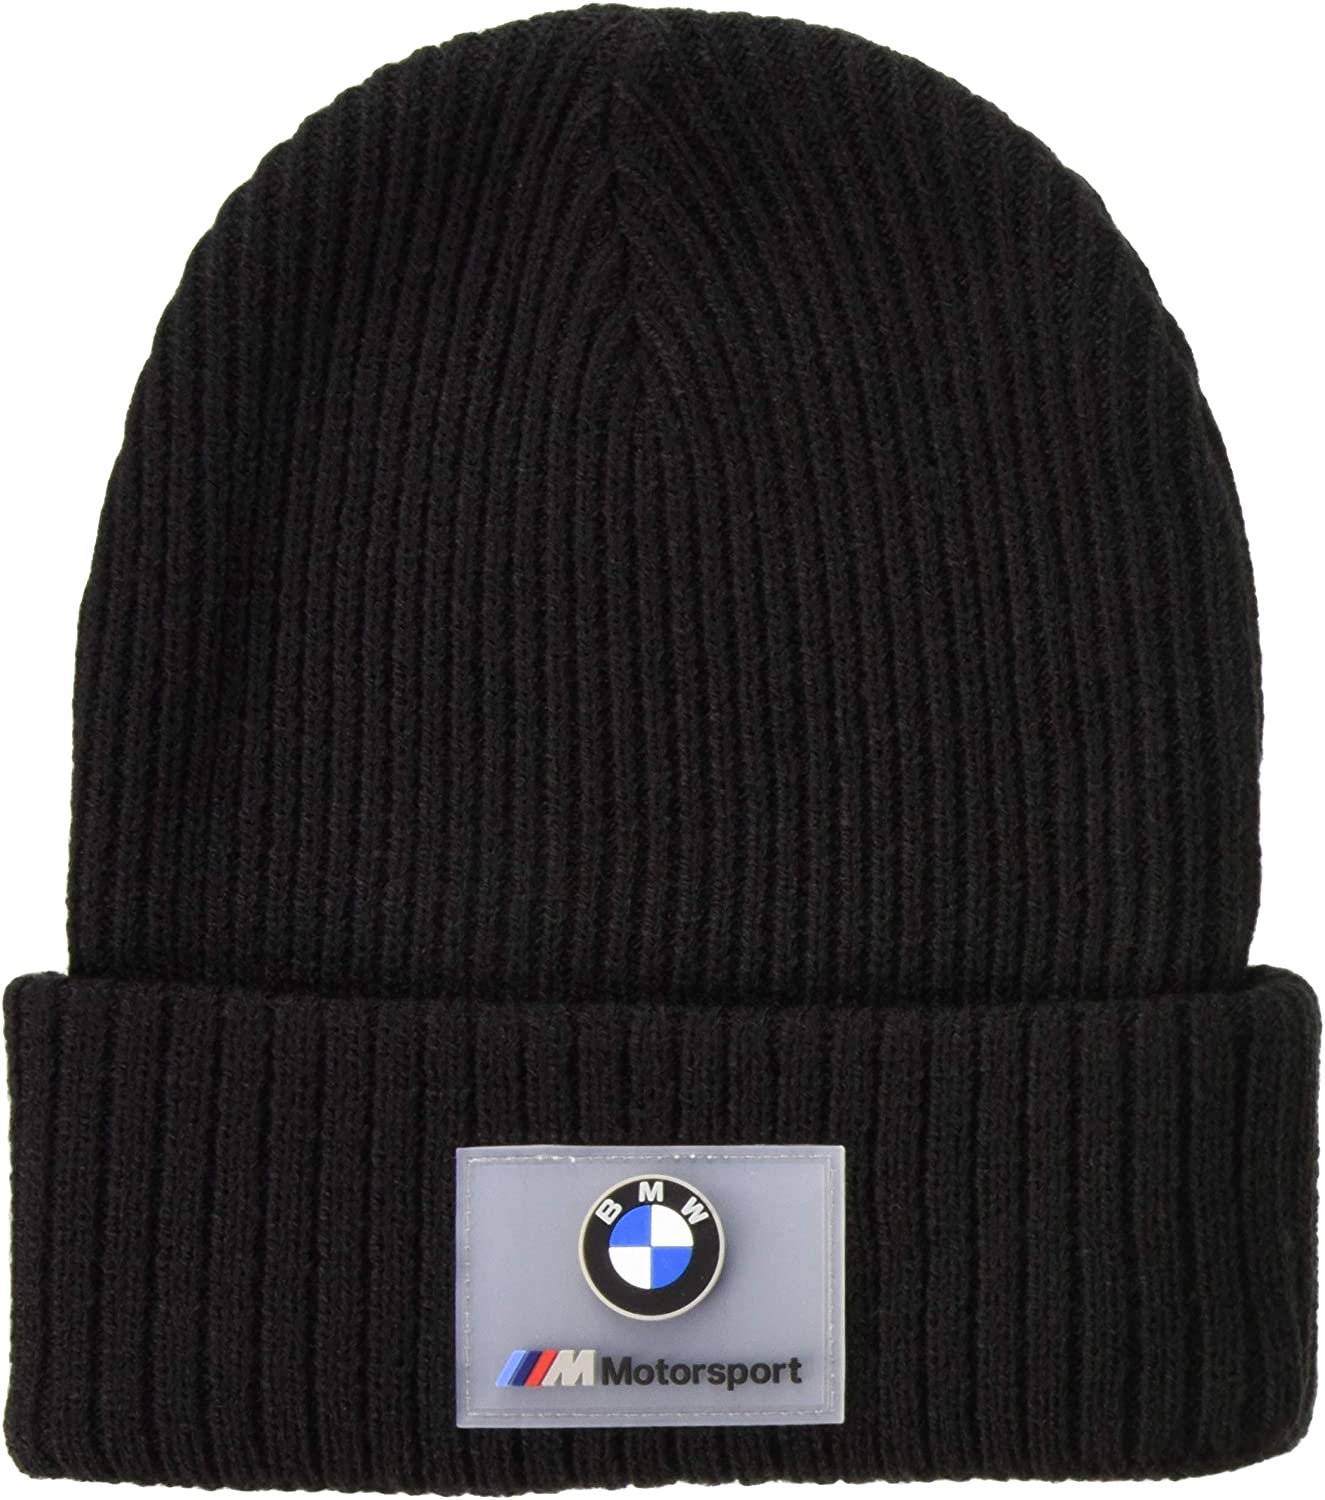 Bonnet PUMA BMW noir vue logo BMW